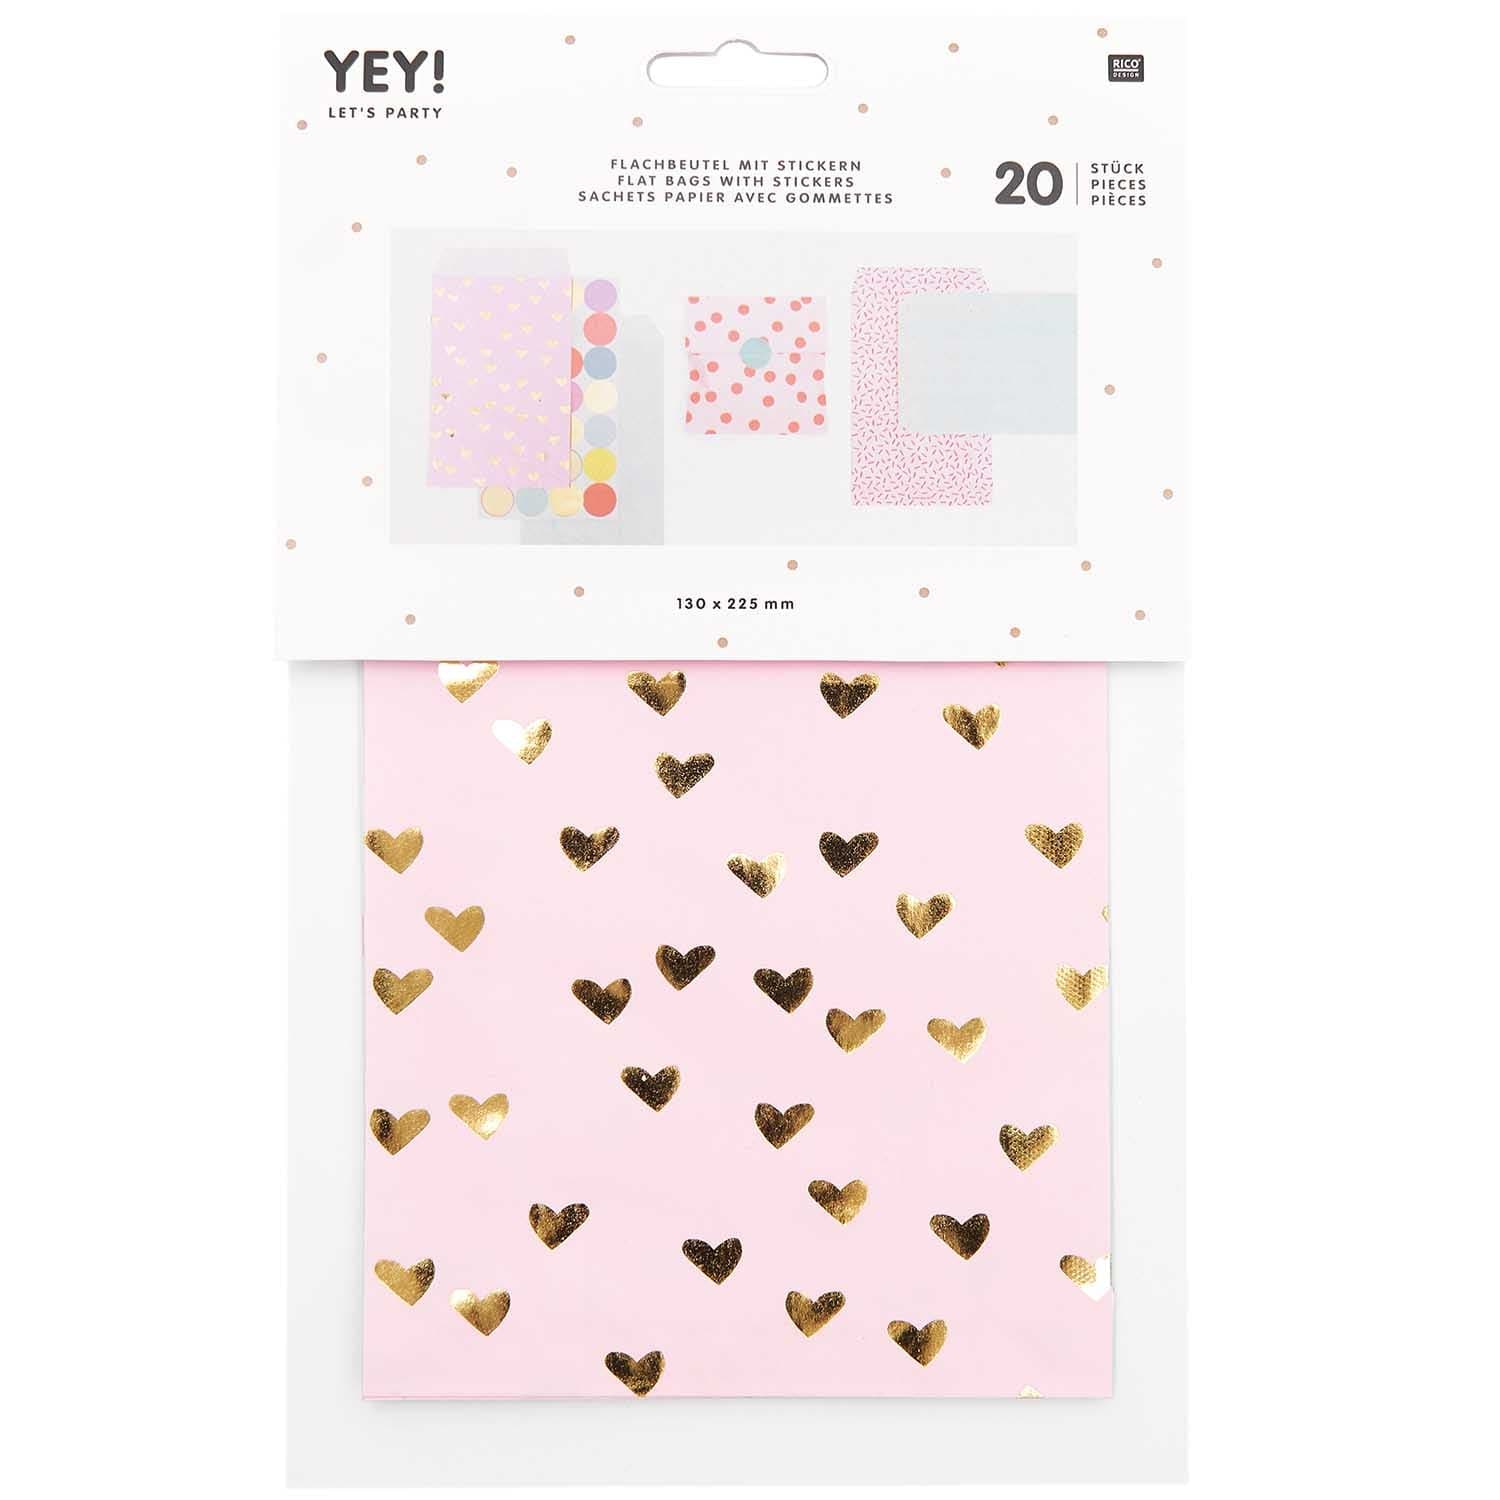 Pretty Paper Bags | Party Bags Supplies | Pretty Little Party Shop  Rico Design